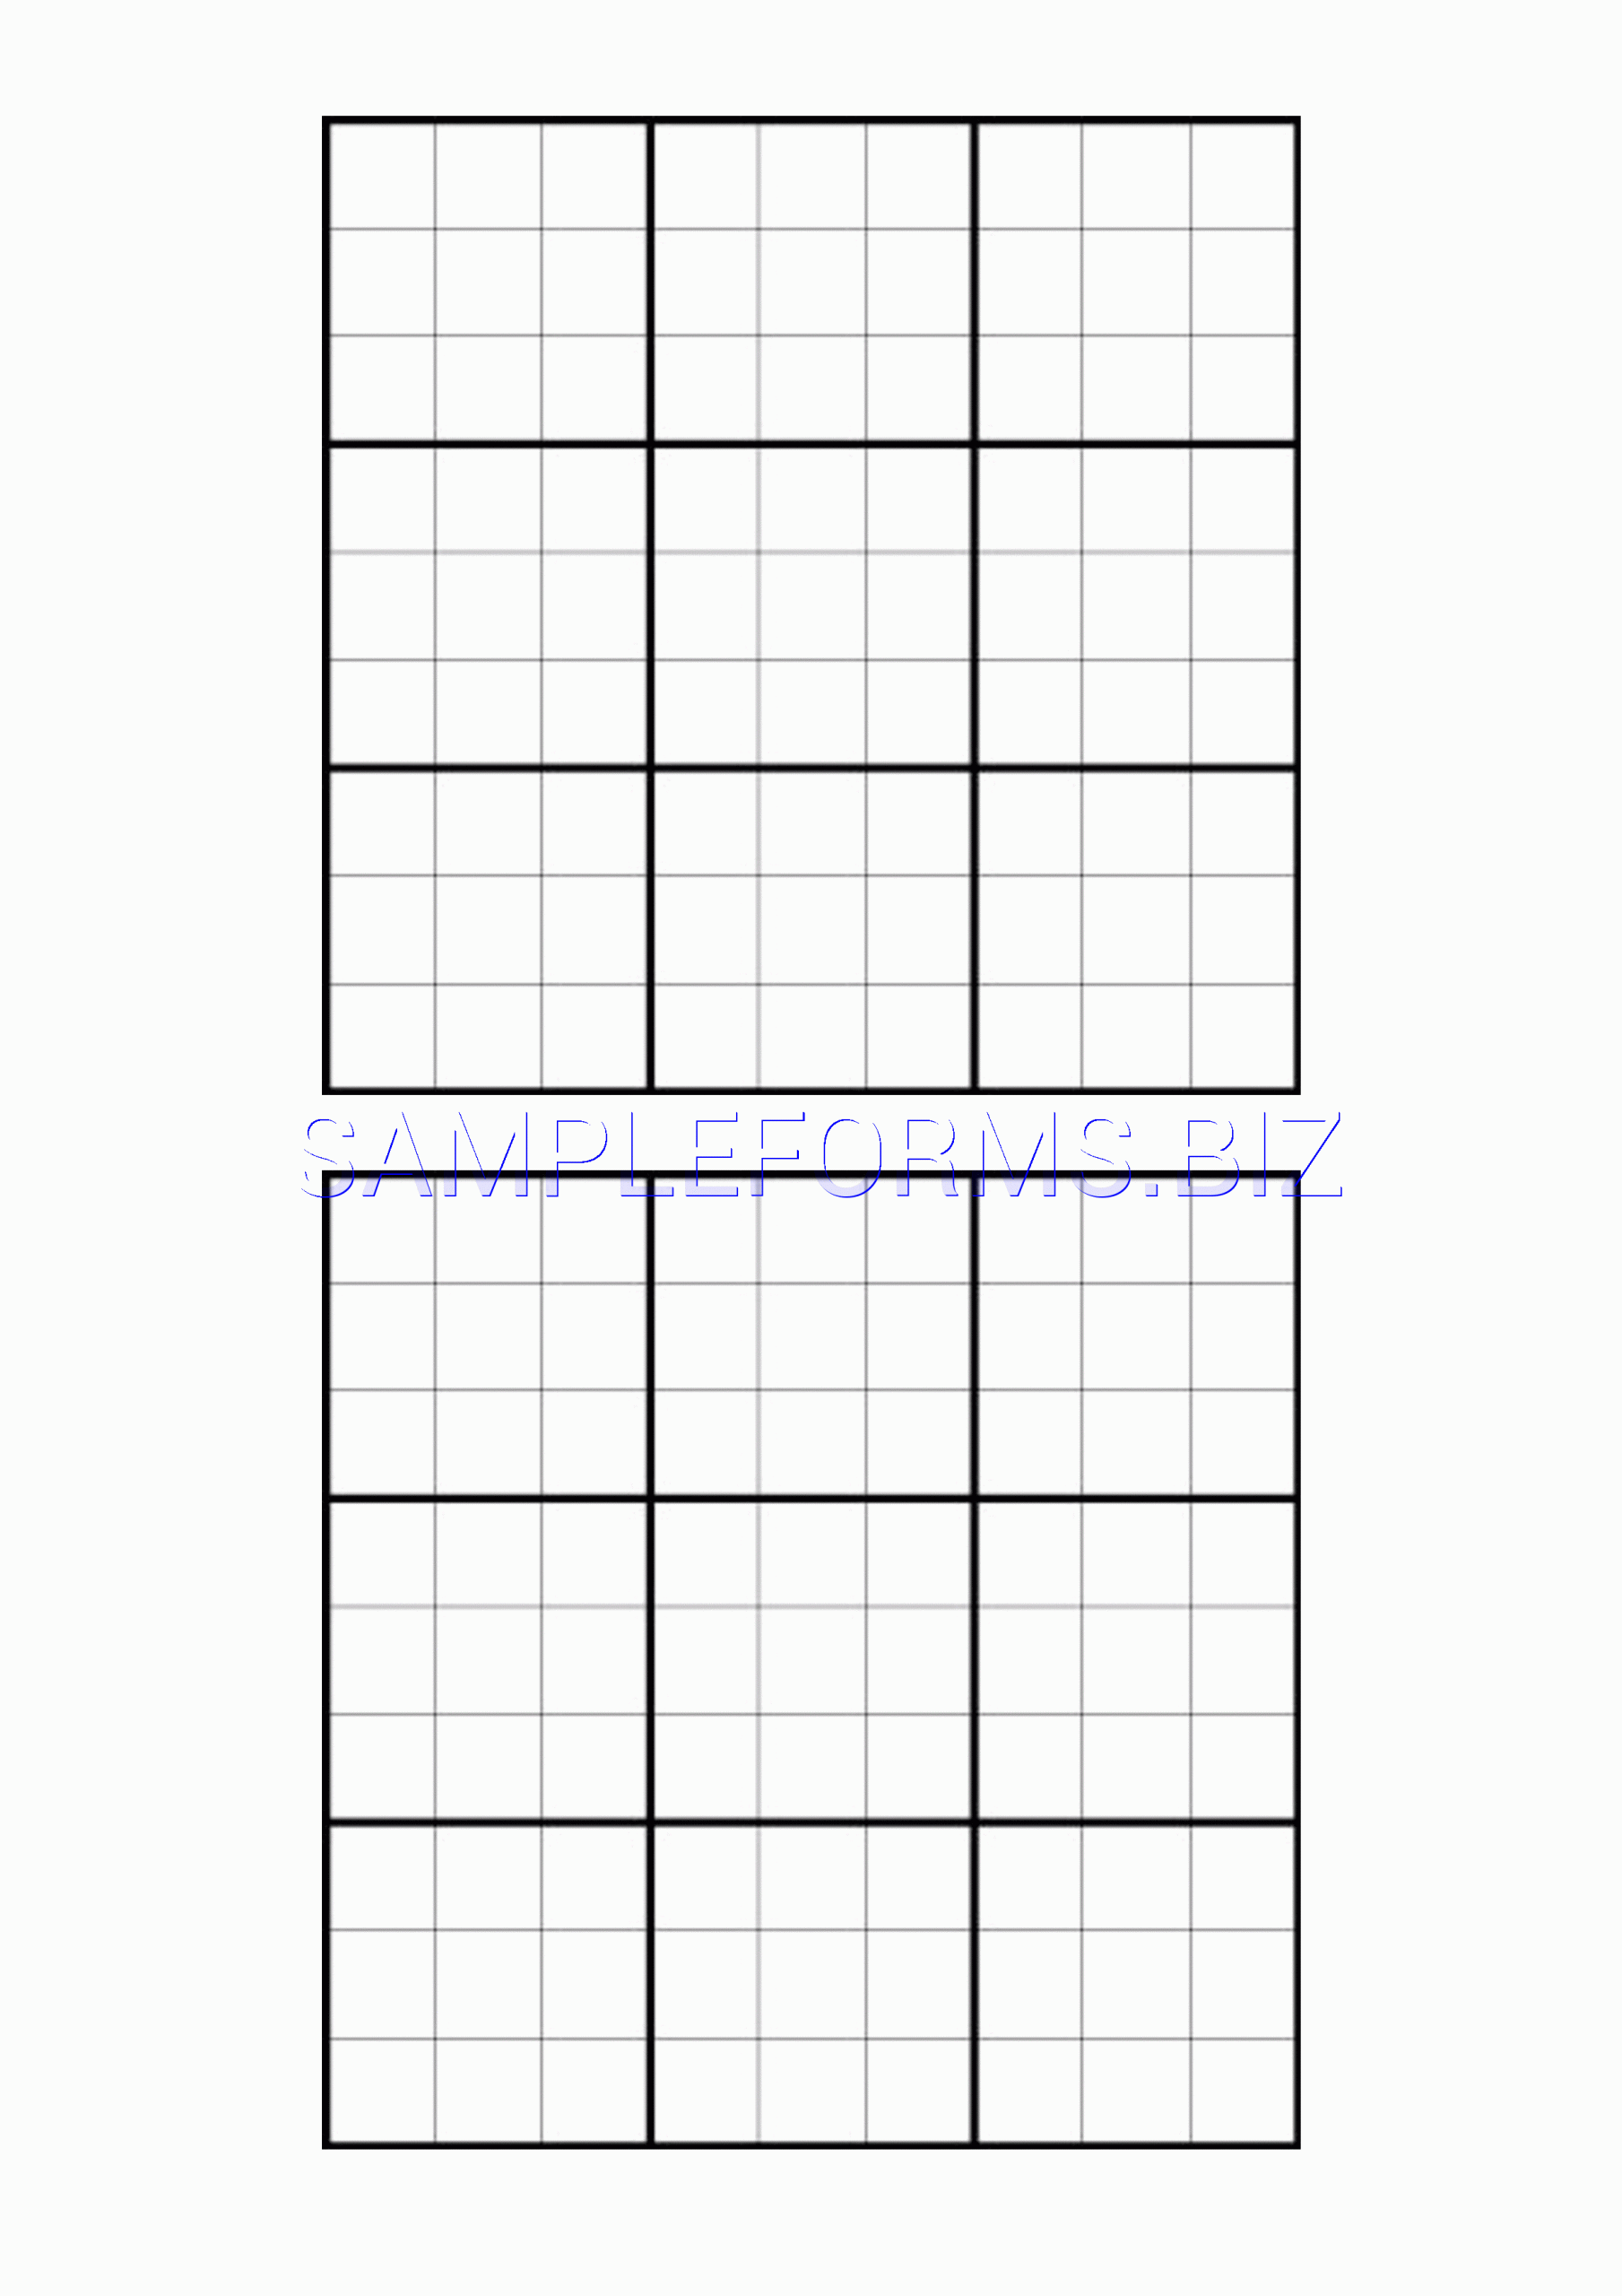 Printable Blank Sudoku Grid PDF Sudoku Printable